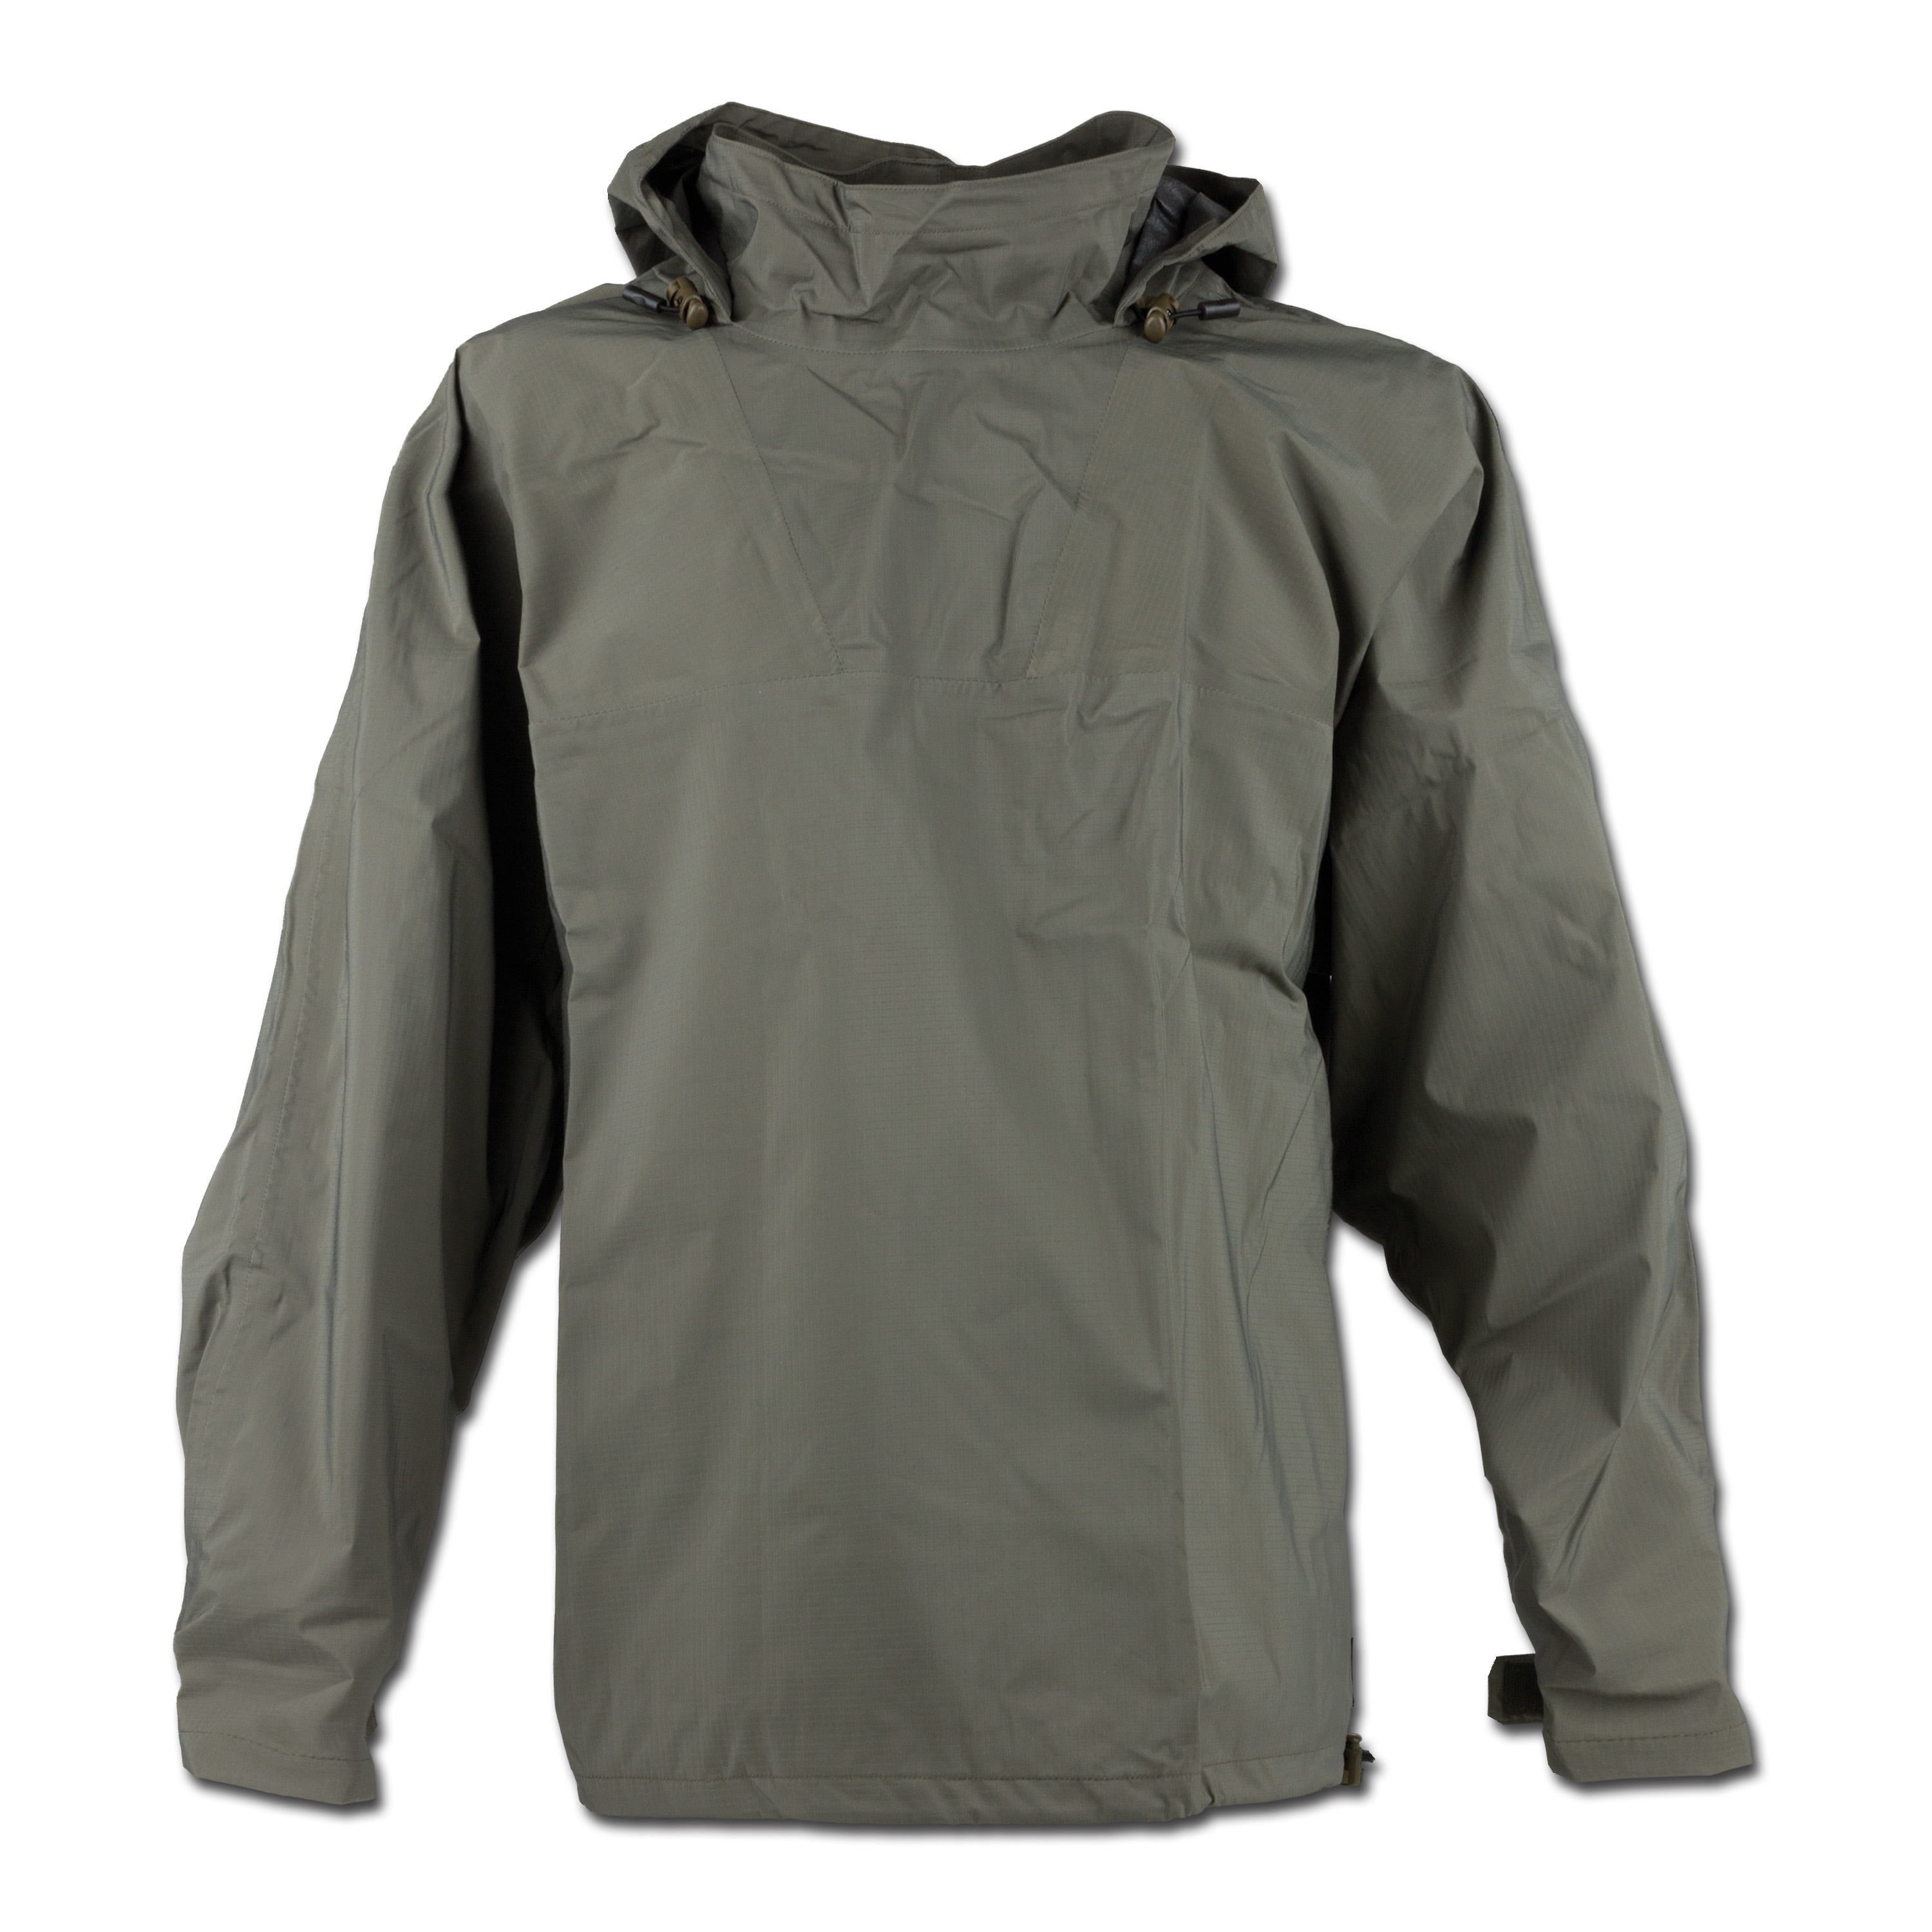 Carinthia Survival Rain Suit Jacket olive | Carinthia Survival Rain ...